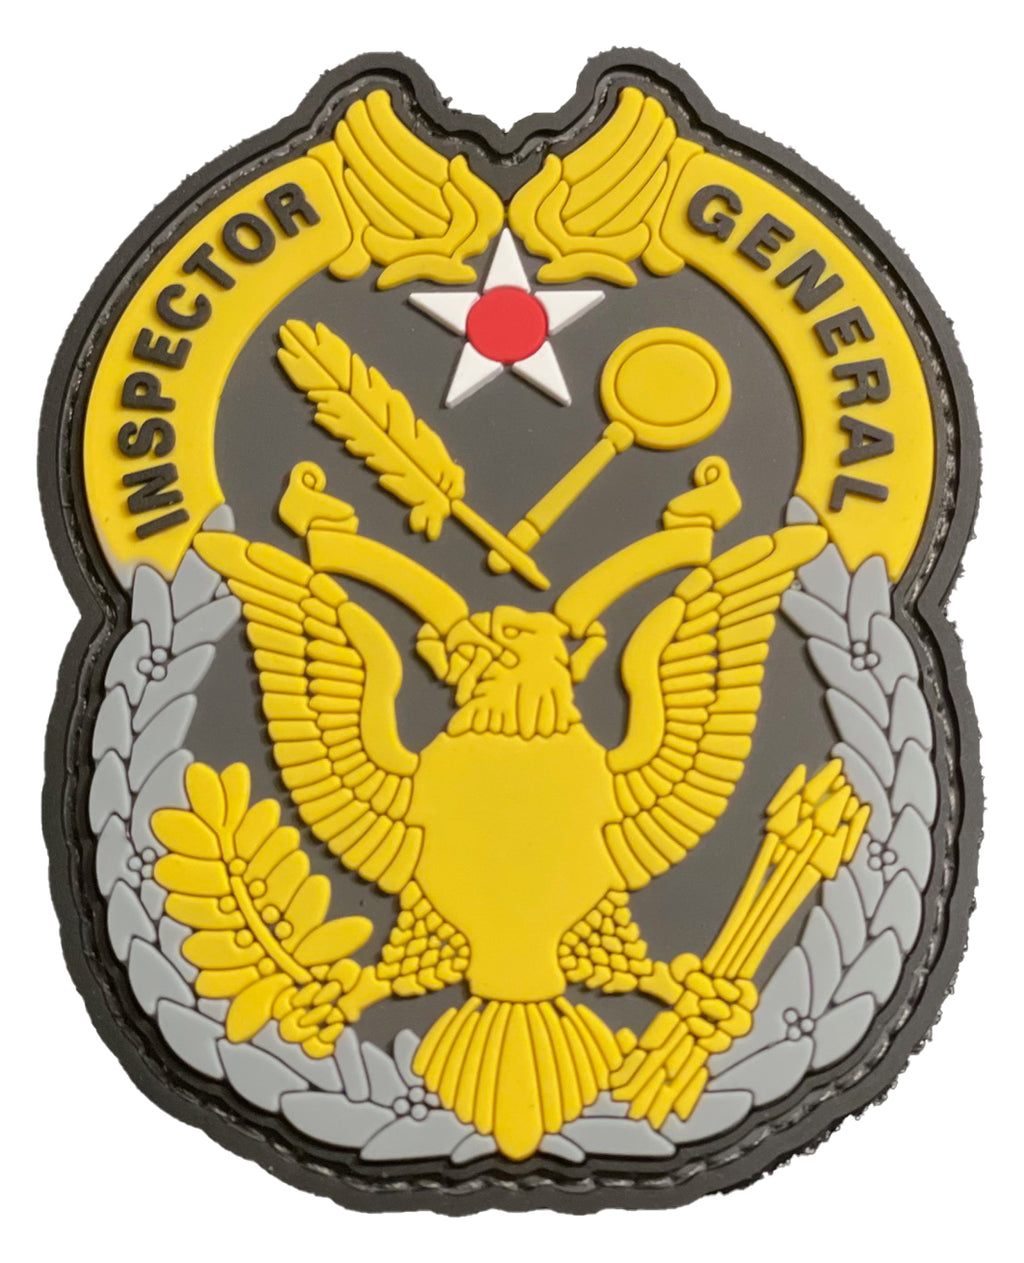 Inspector General (IG) Badge PVC Patch